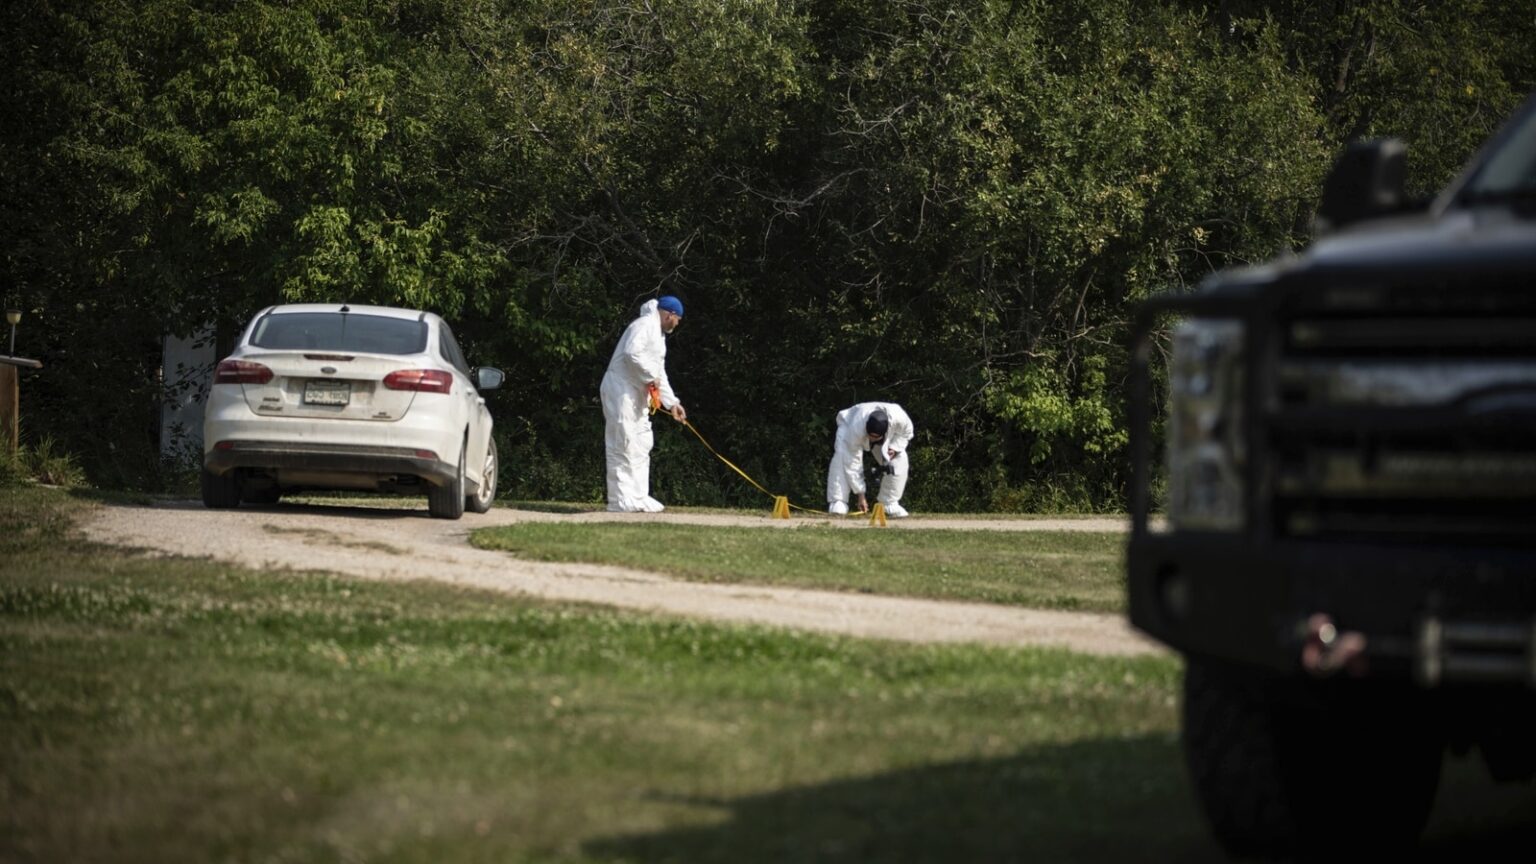 Canada stabbings: One suspect found dead